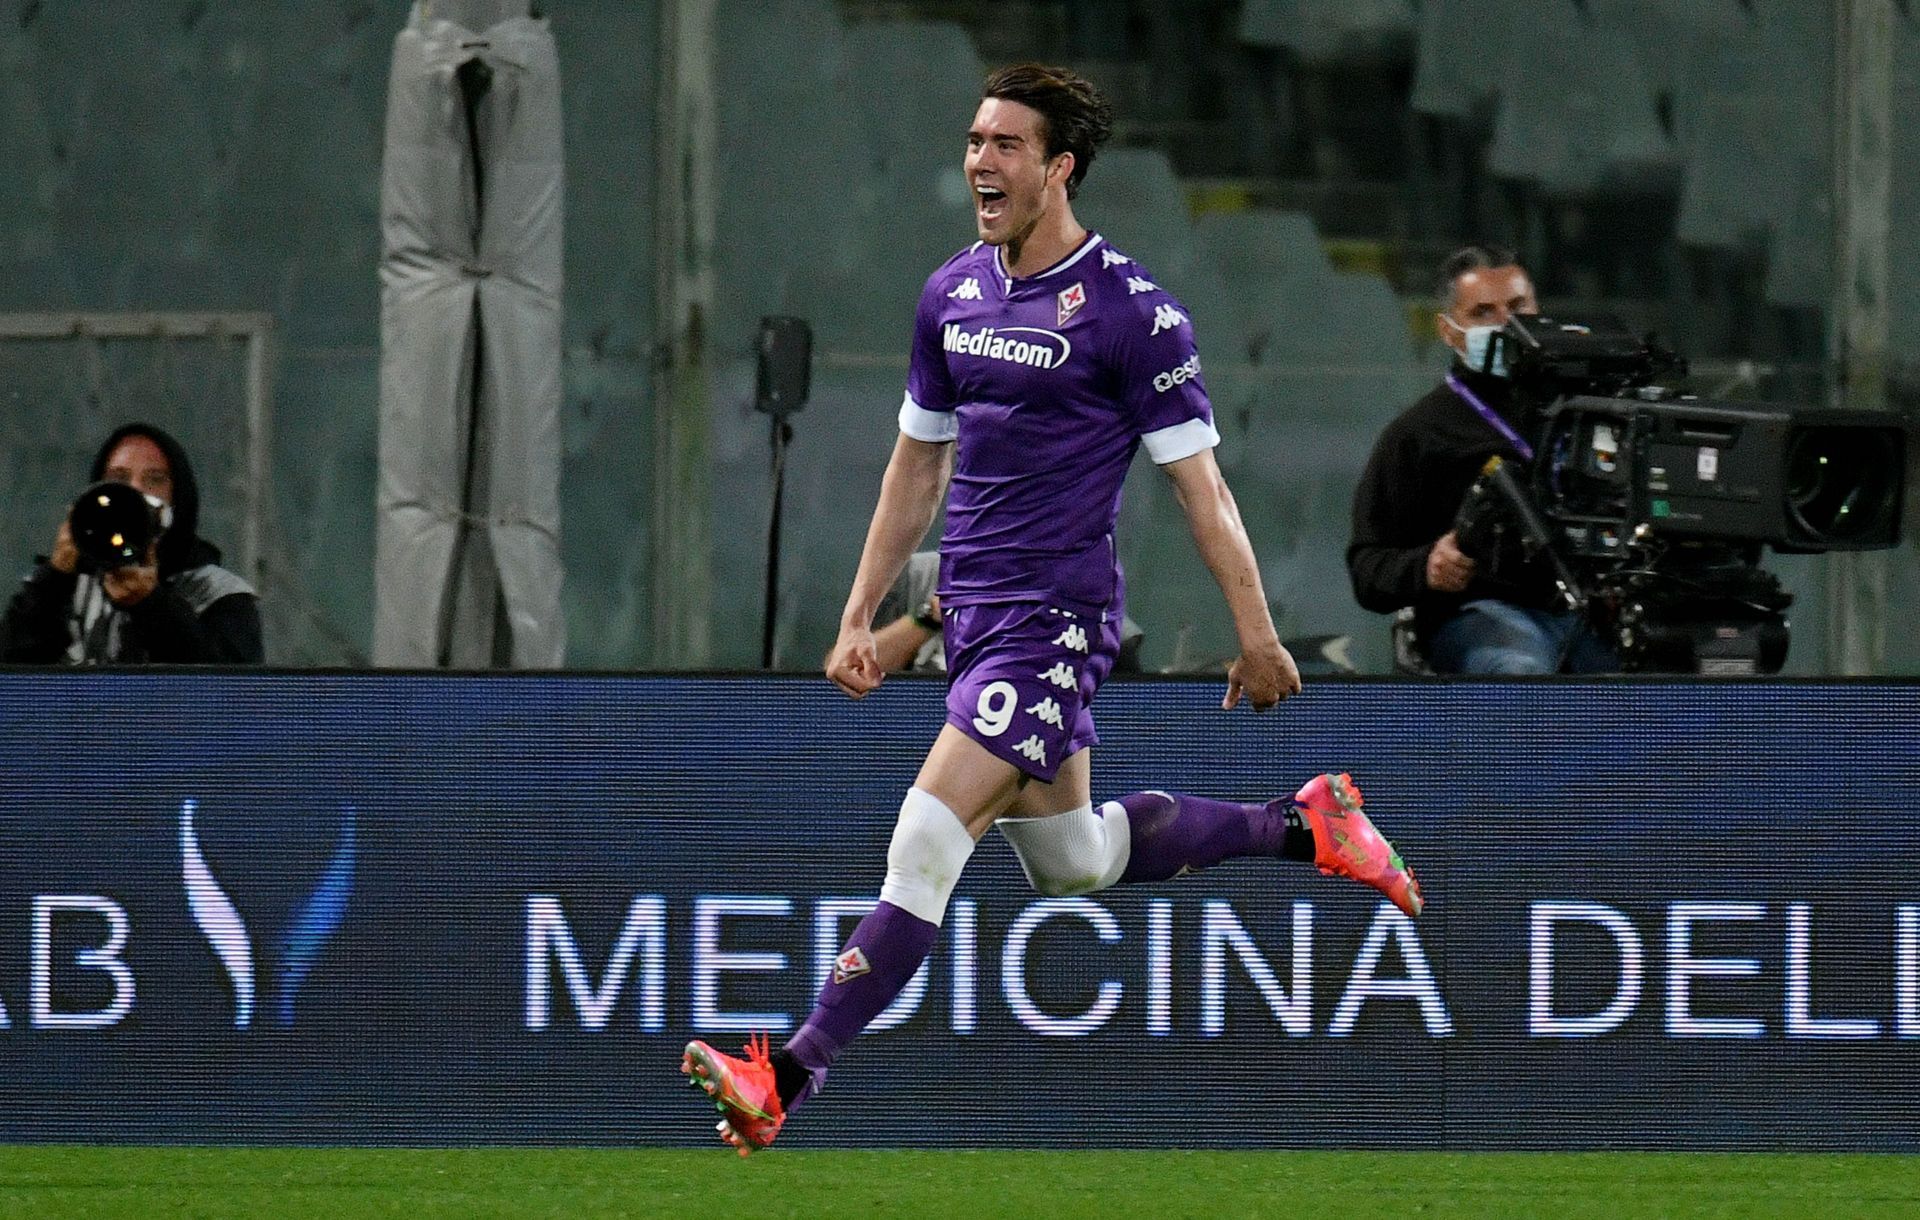 Fiorentina play Venezia on Monday in Serie A